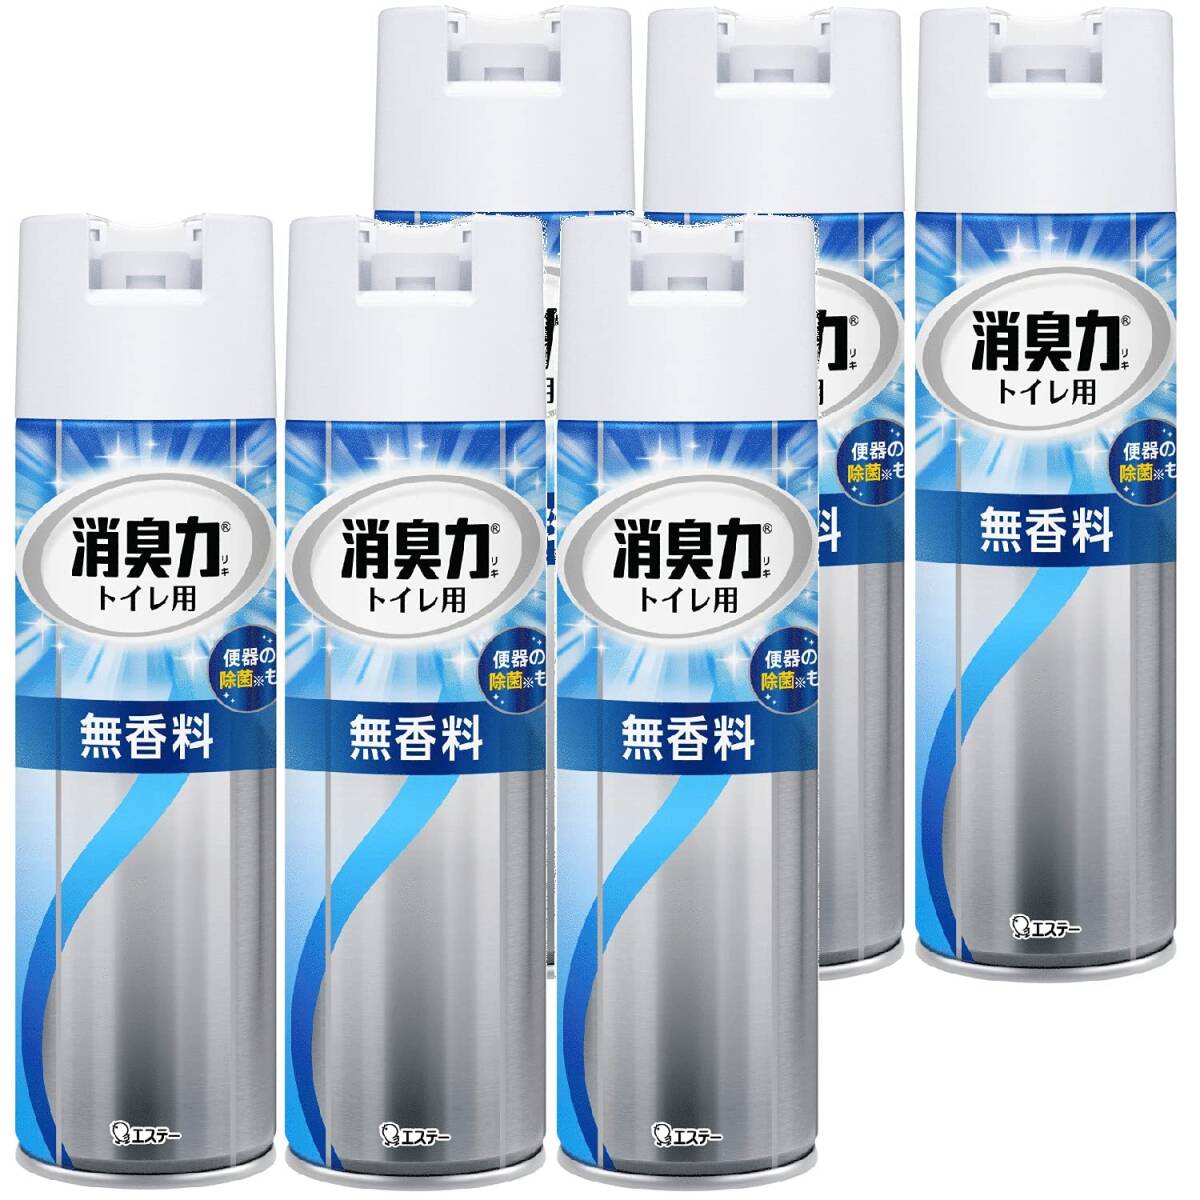 [ bulk buying ] toilet. deodorization power for rest room fragrance free 330ml×6 piece toilet deodorization deodorant deodorization aromatic 